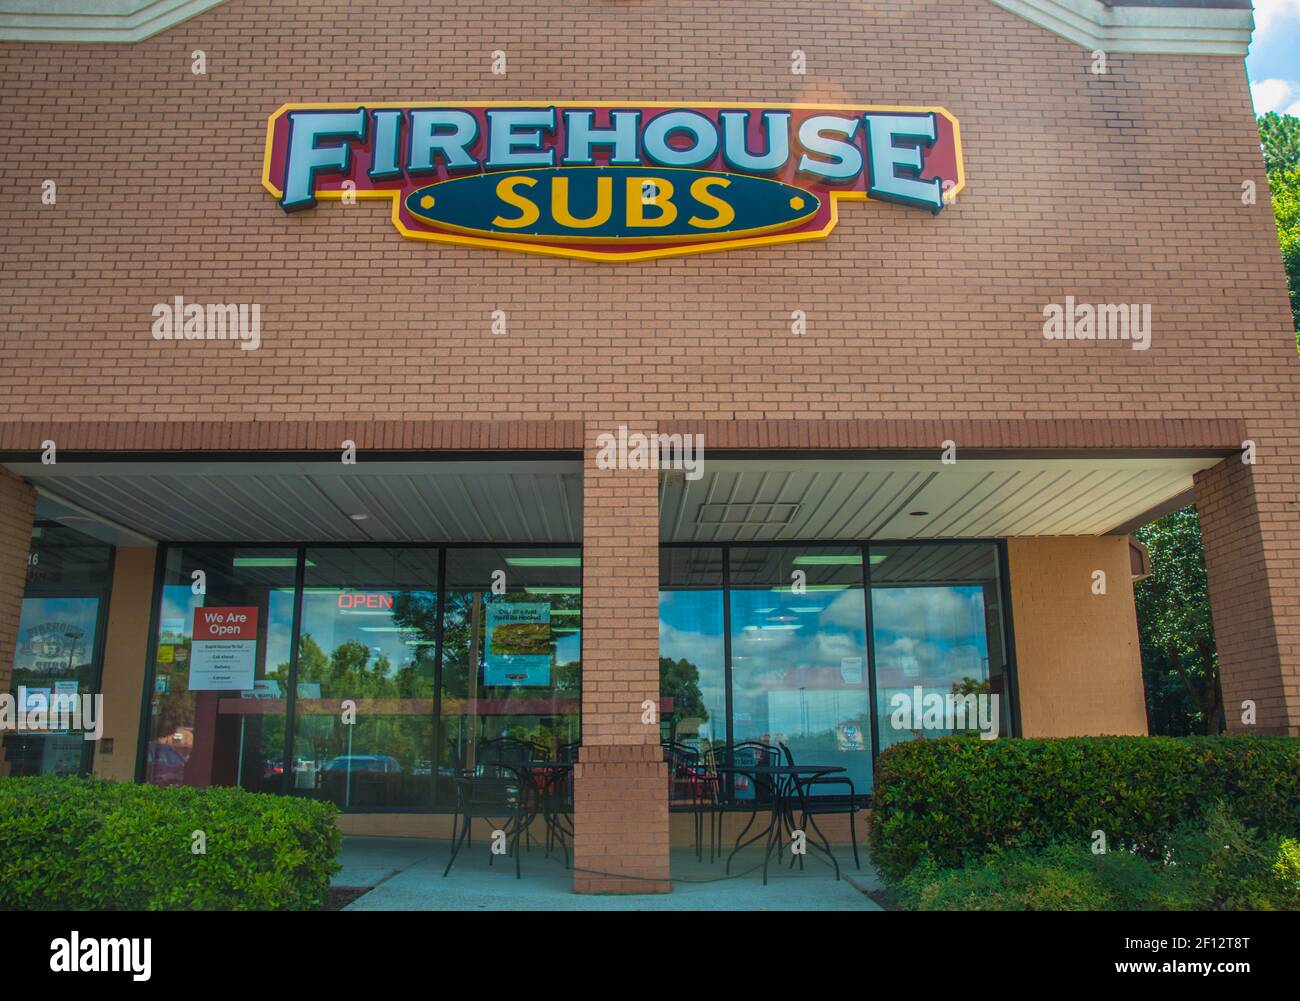 Gwinnett County, GA / USA - 07 09 20: Firehouse Subs segno e ingresso Foto Stock